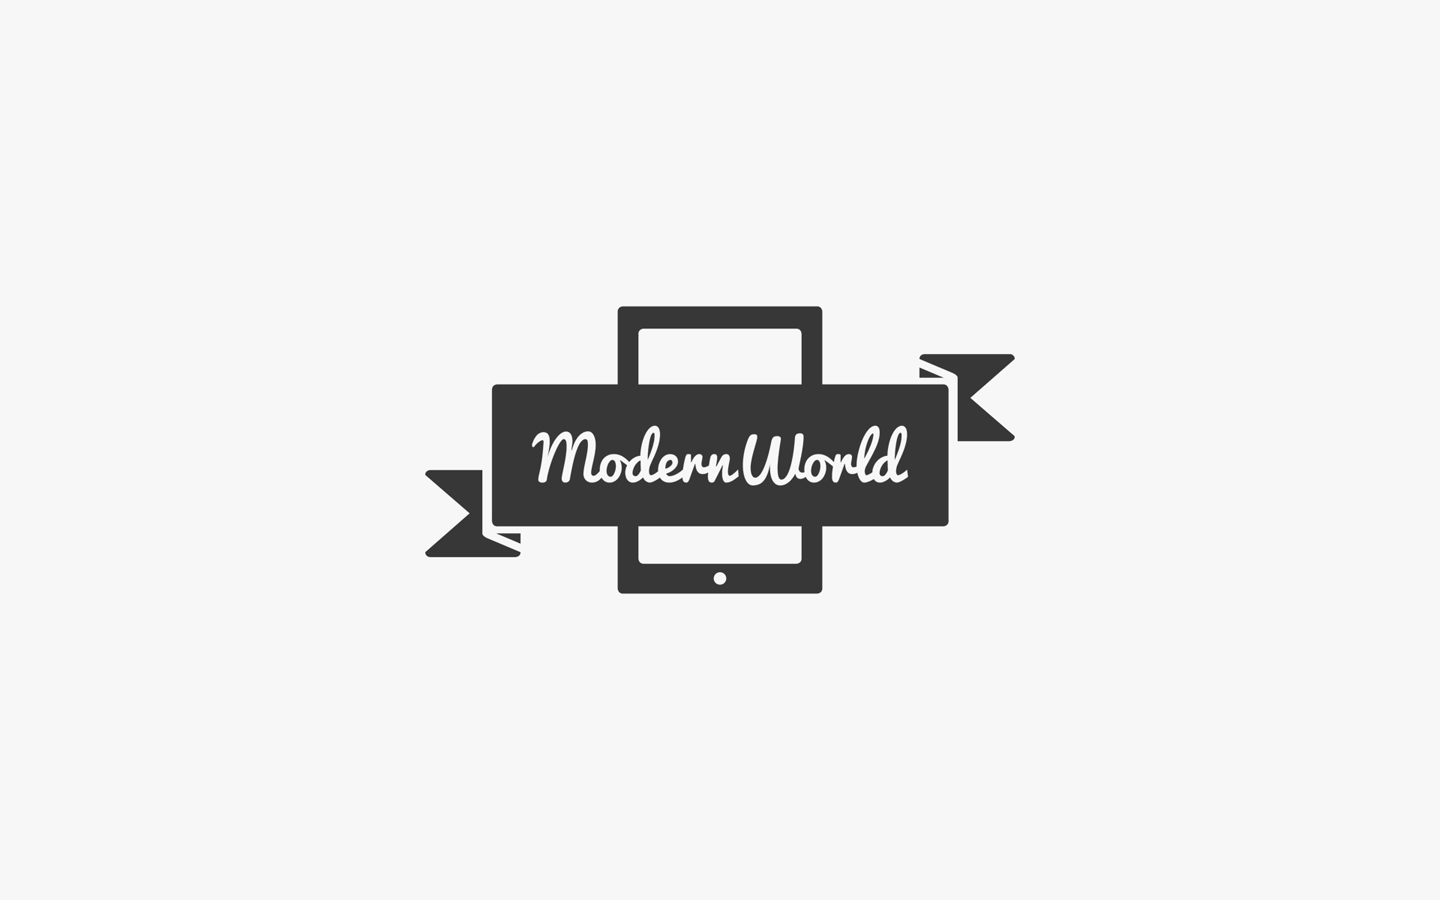 Modern World Illustrations, Logo Design in Mono